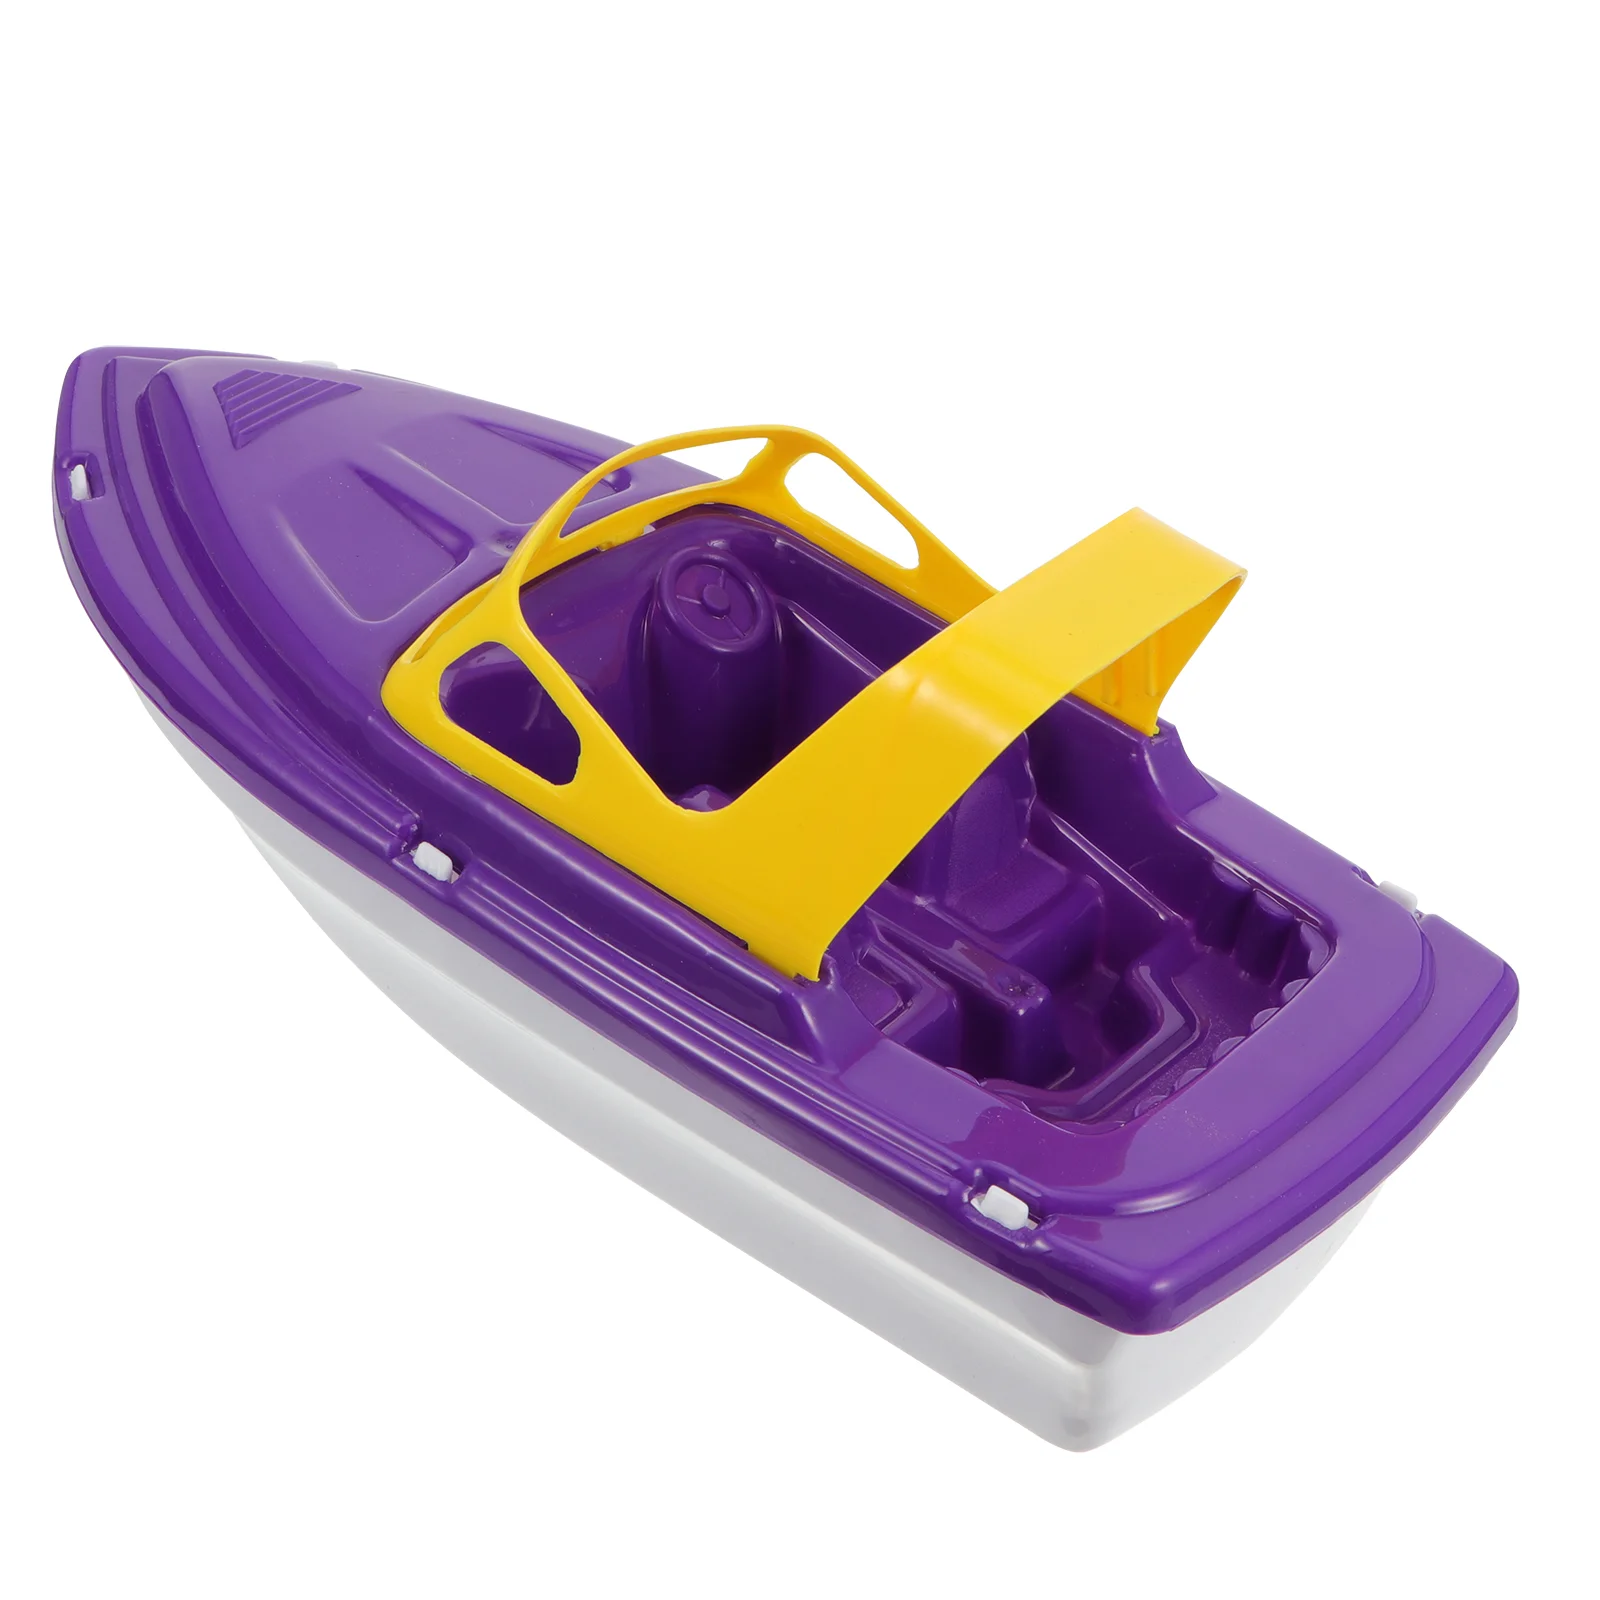 Toys Toy Boat Bath Poolboats Kidsbathtub Water Floating Toddler Race Sho... - $16.13